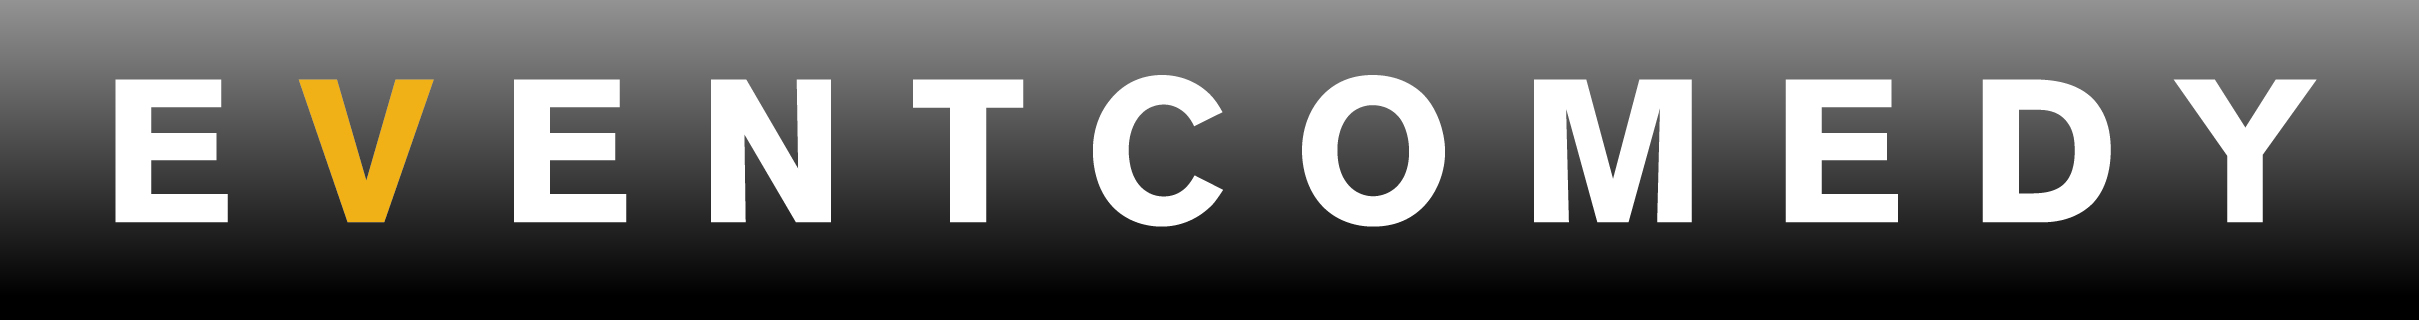 logo-eventcomedy_hintergrund_4c.jpg